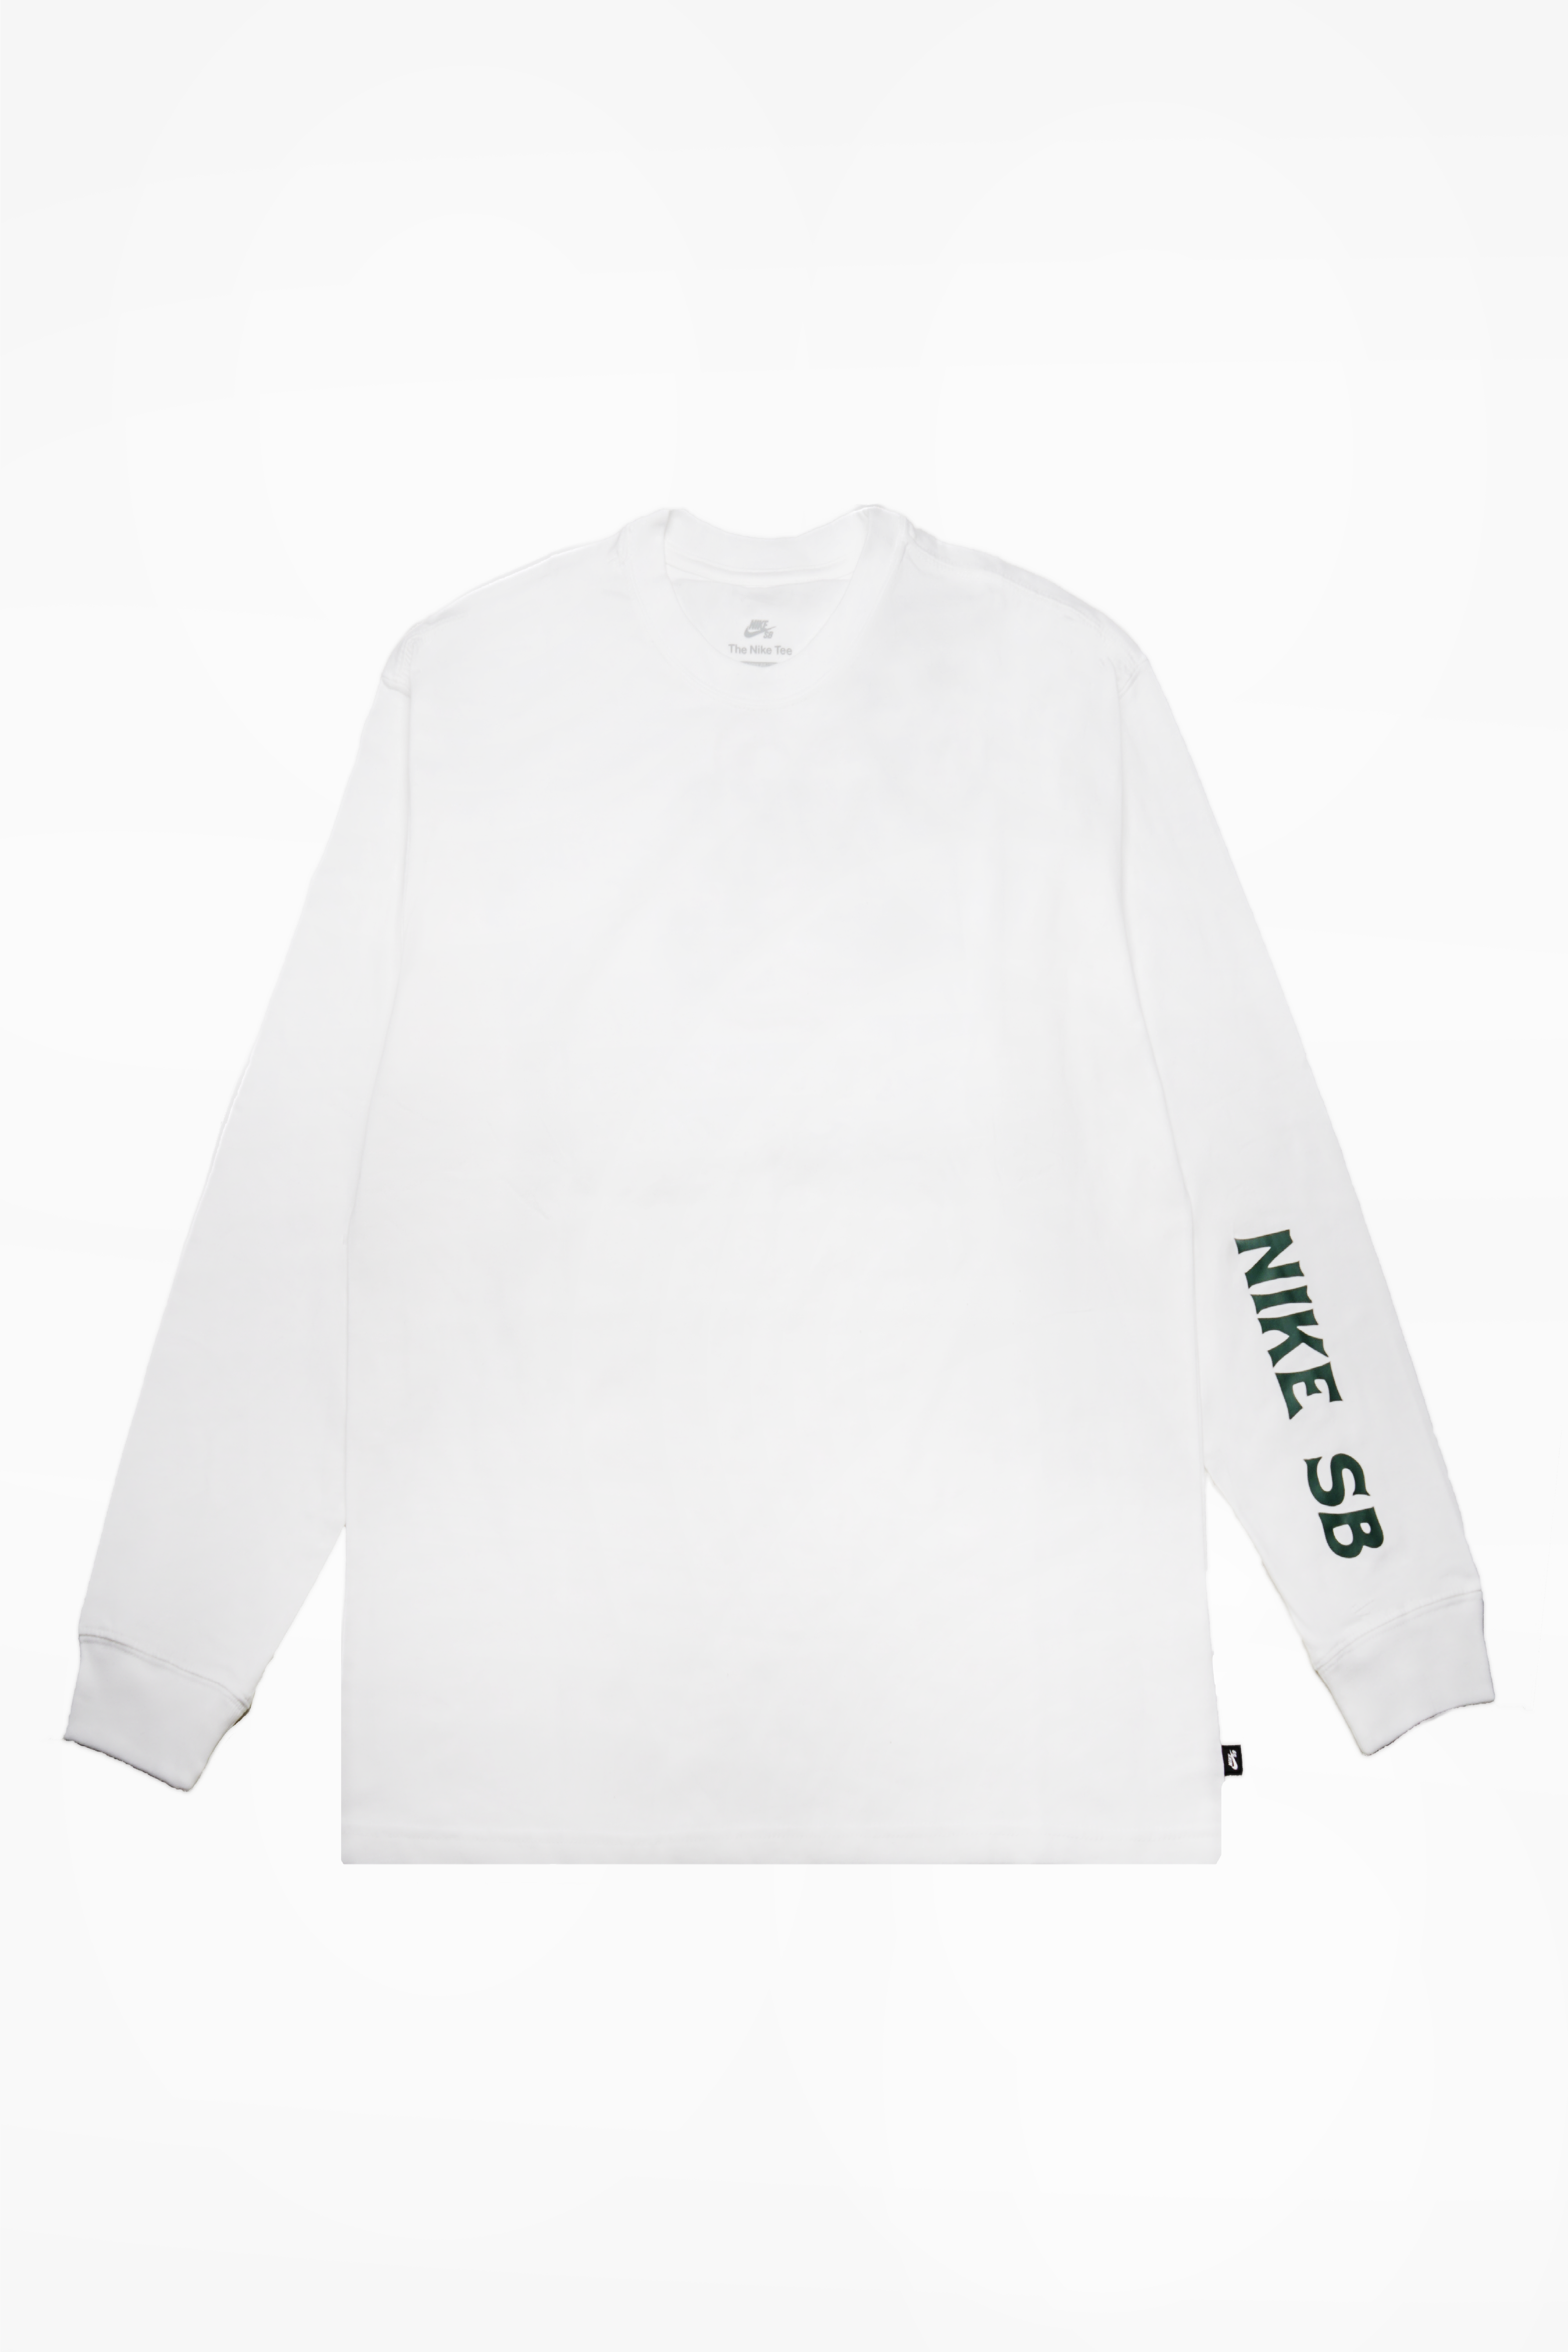 Selectshop FRAME - NIKE SB Nike SB Snaked Longlseeve Tee T-Shirts Dubai